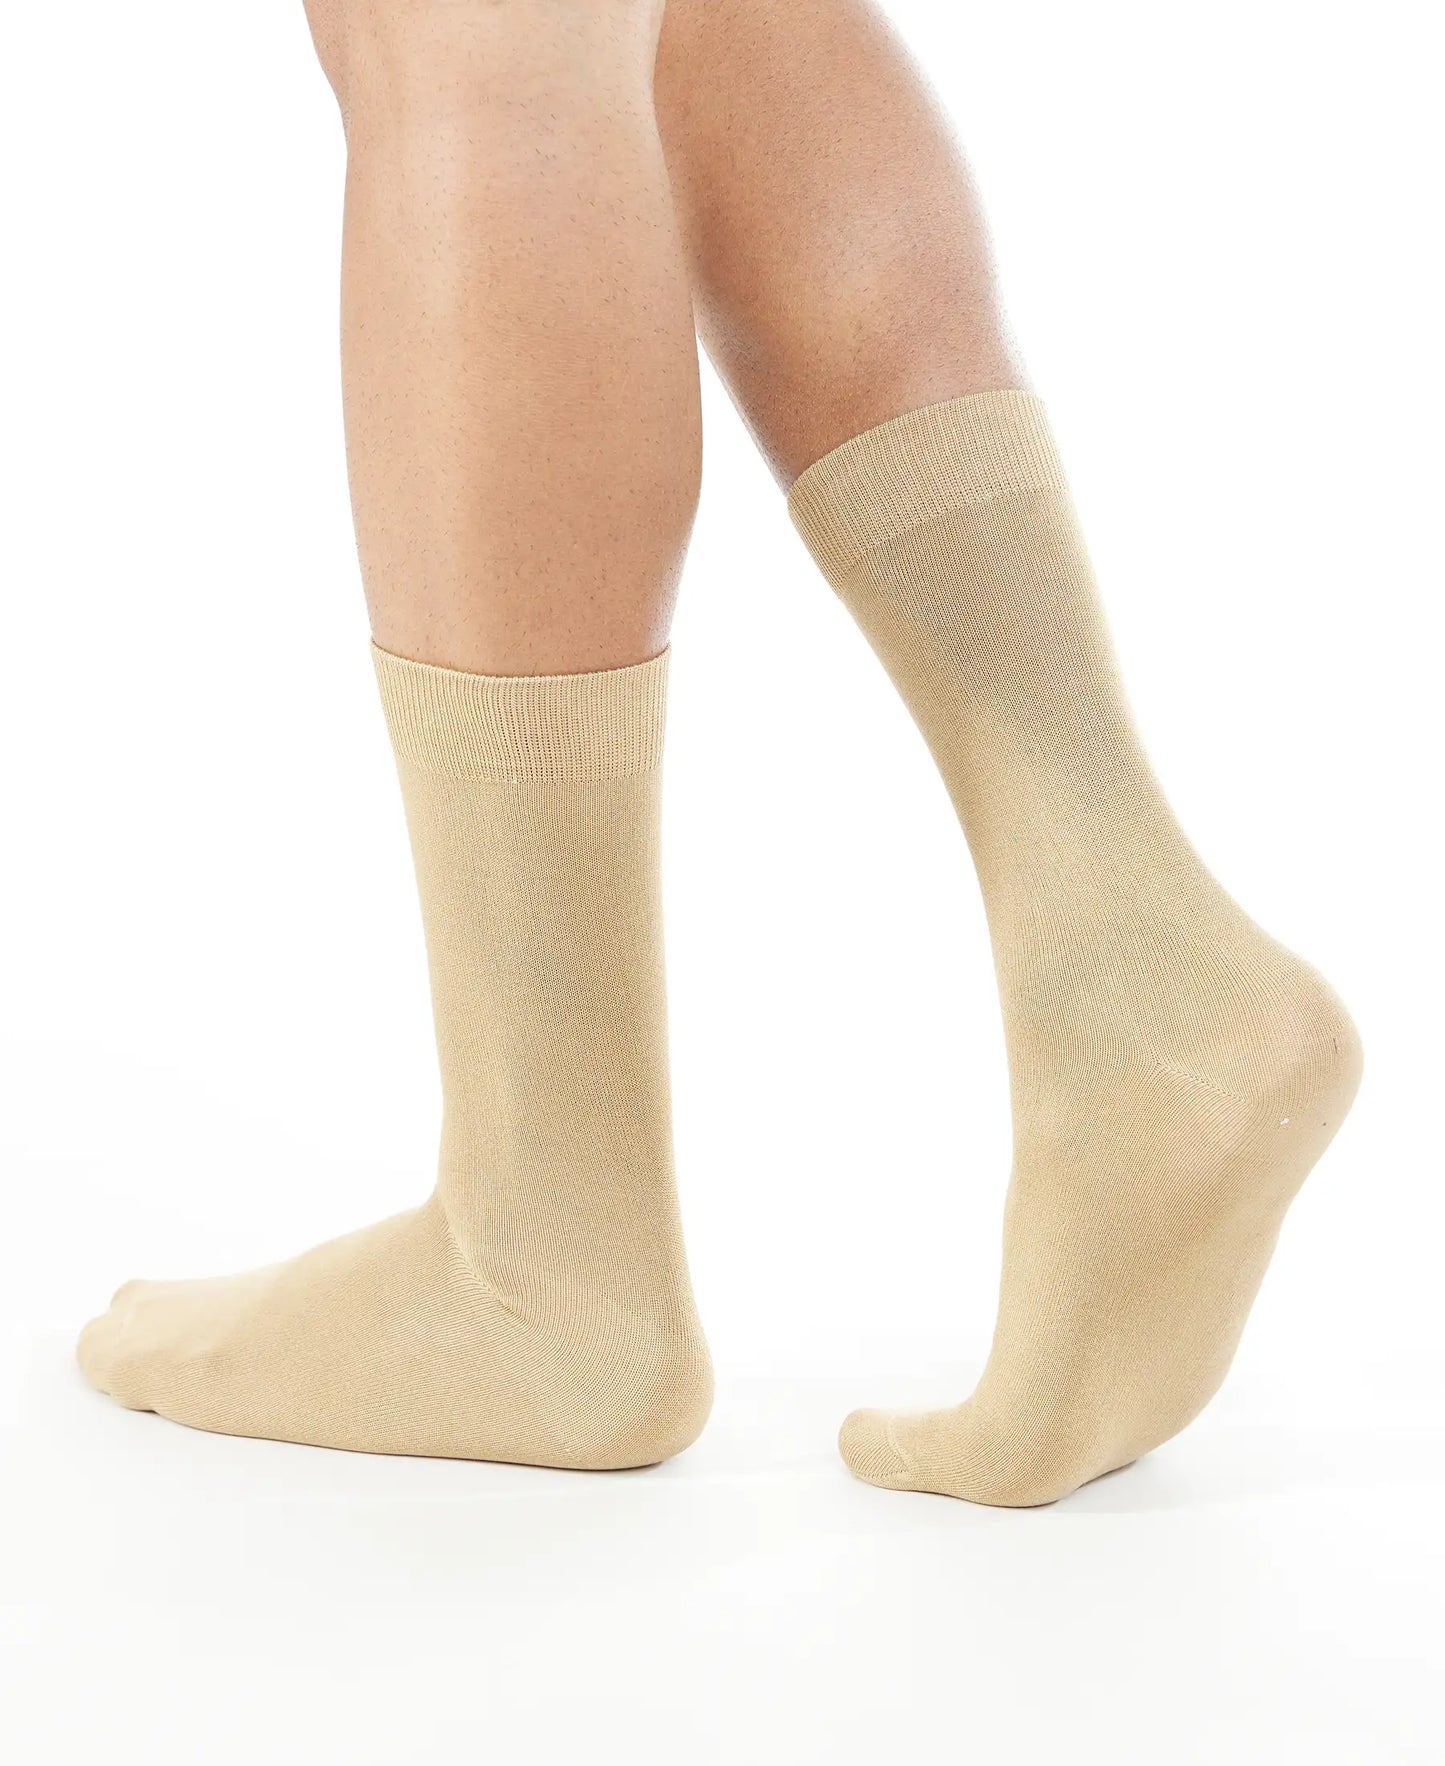 Mercerized Cotton Crew Length Socks with StayFresh Treatment - Beige-3